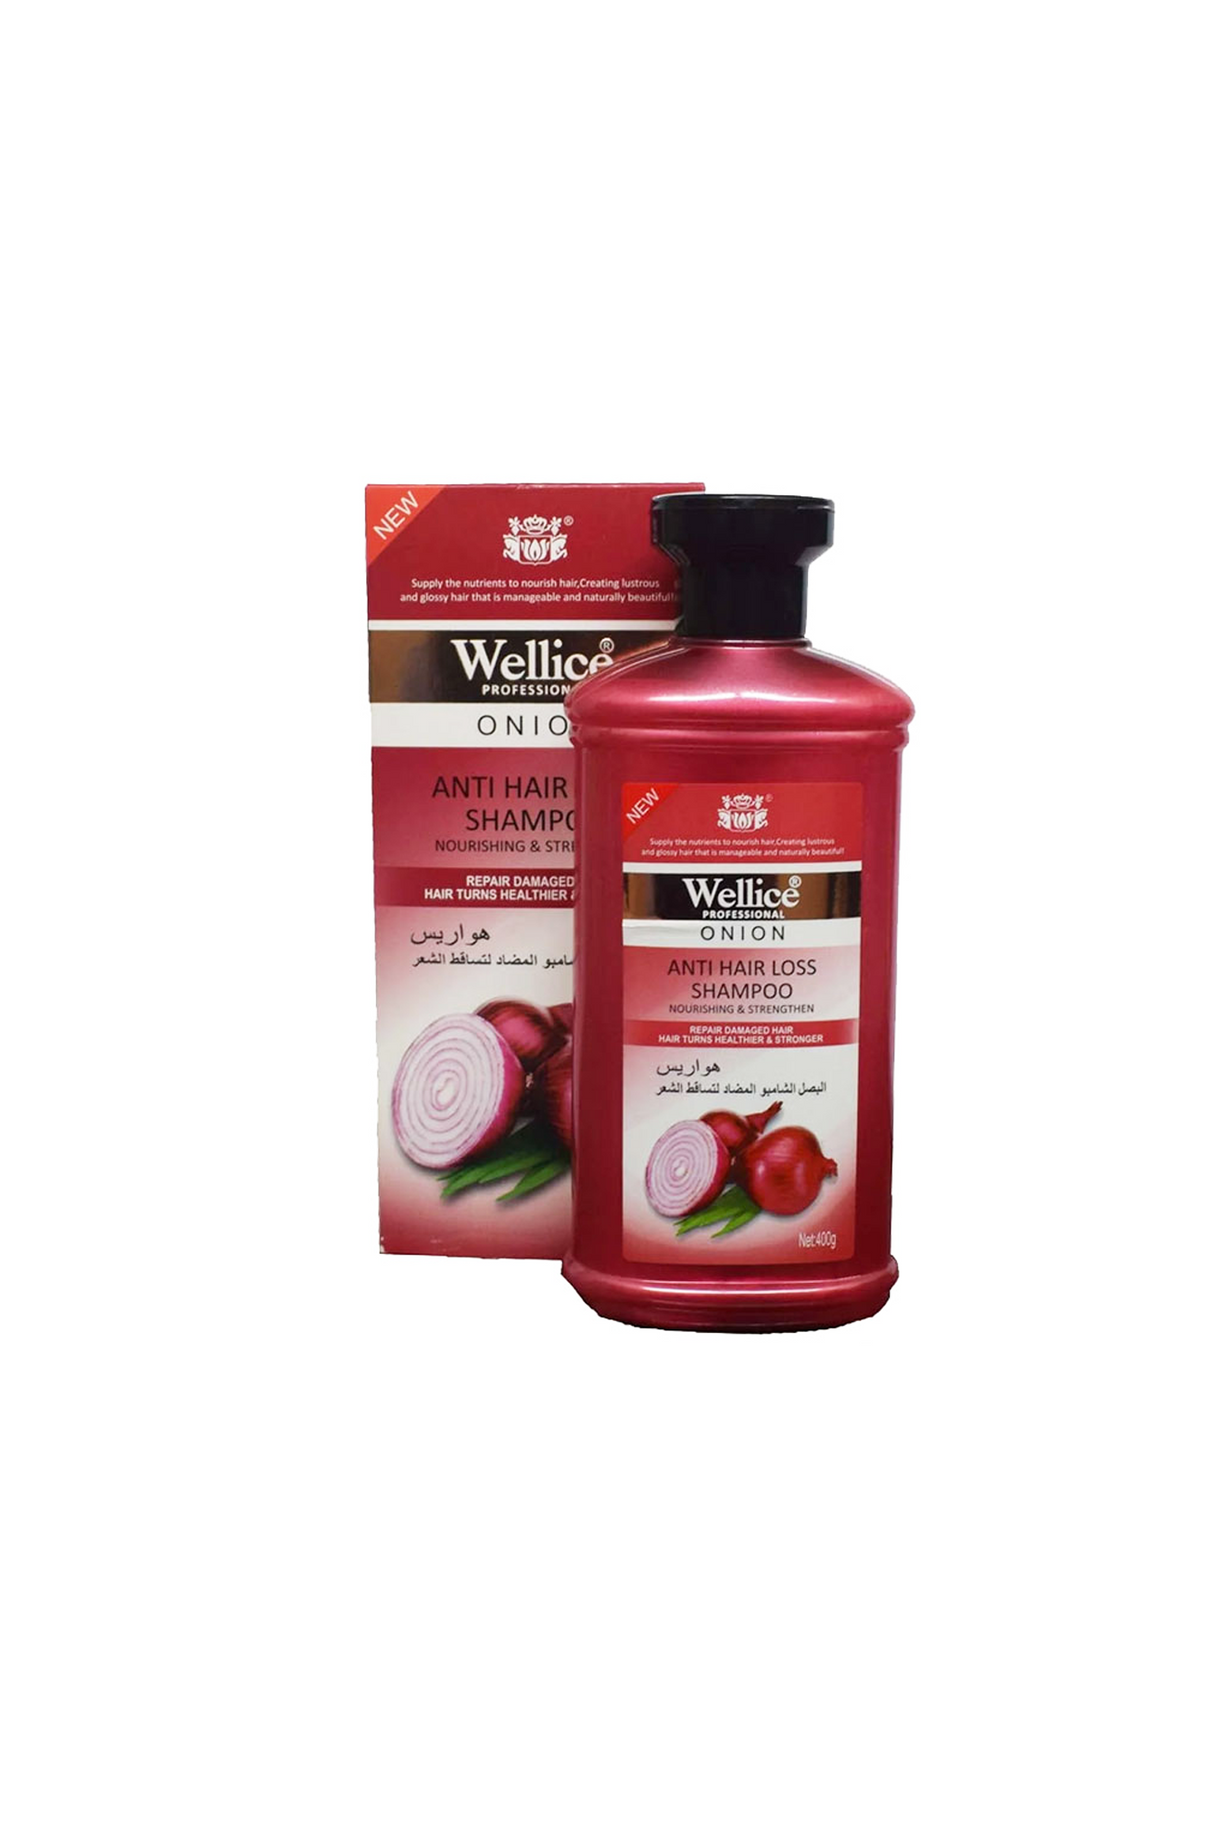 wellice shampoo onion 400g